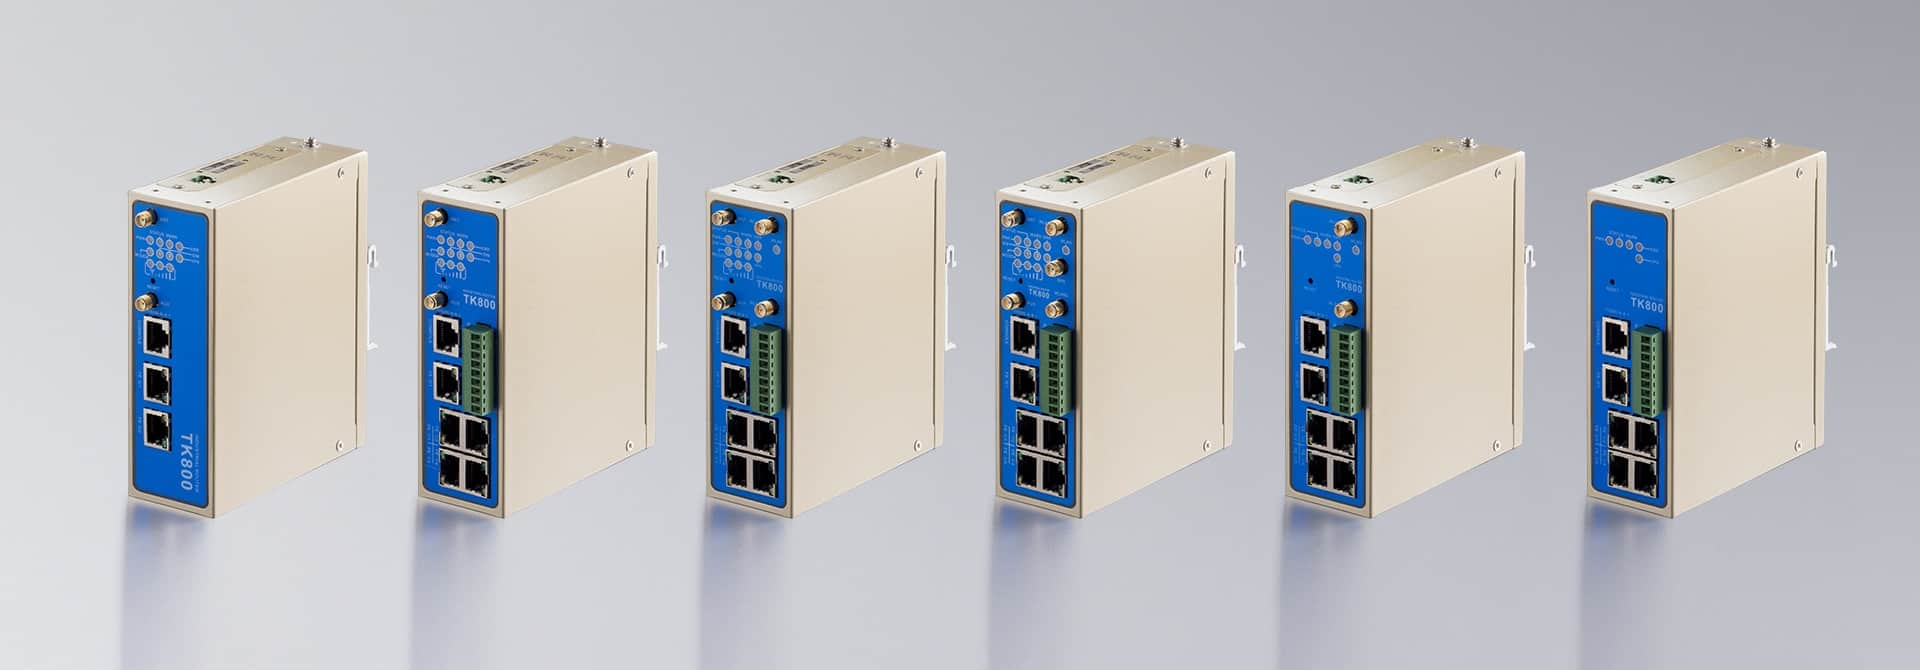 Welotec SMART EMS – Software for mass 4G LTE router deployments